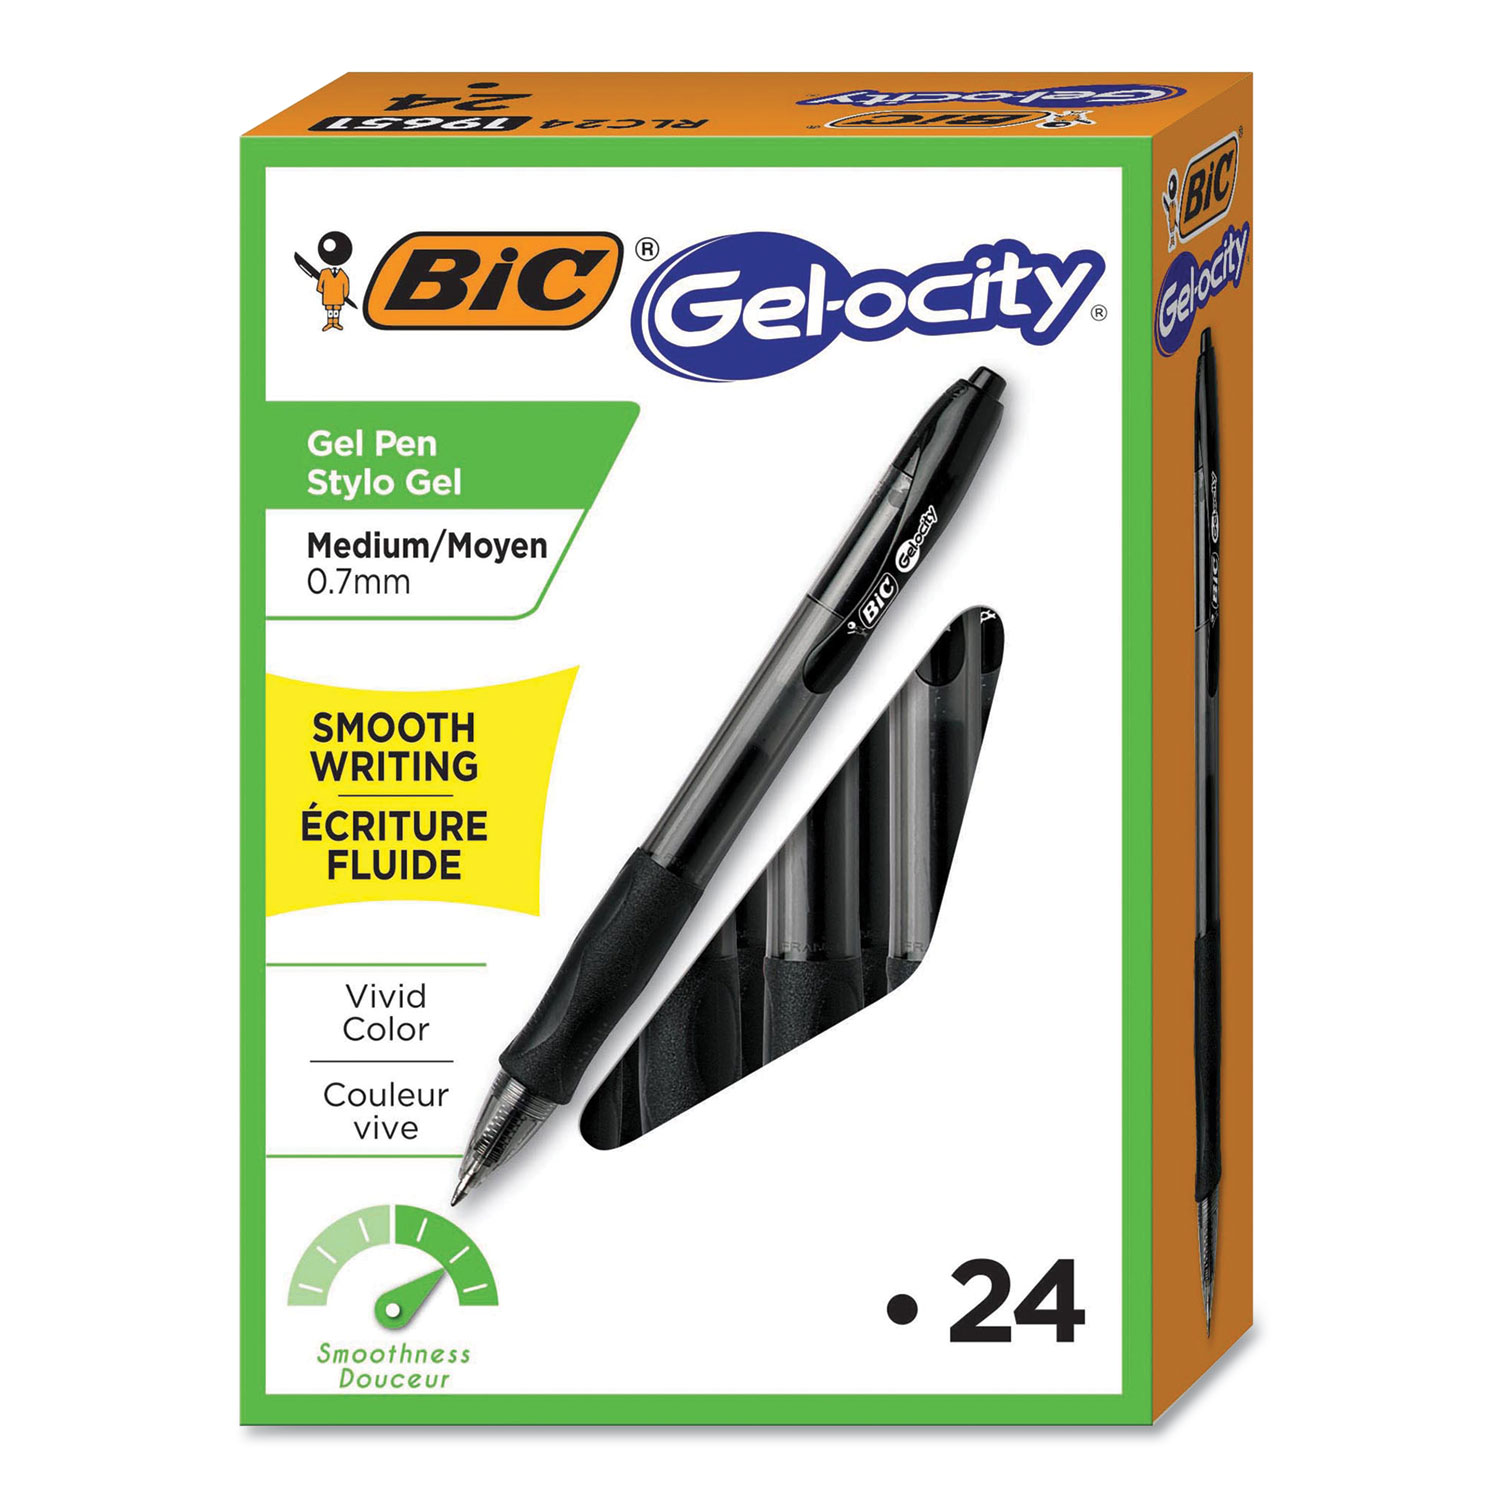  BIC RLC241-BK Gel-ocity Retractable Gel Pen, Medium 0.7mm, Black Ink/Barrel, 24/Pack (BICRLC241BK) 